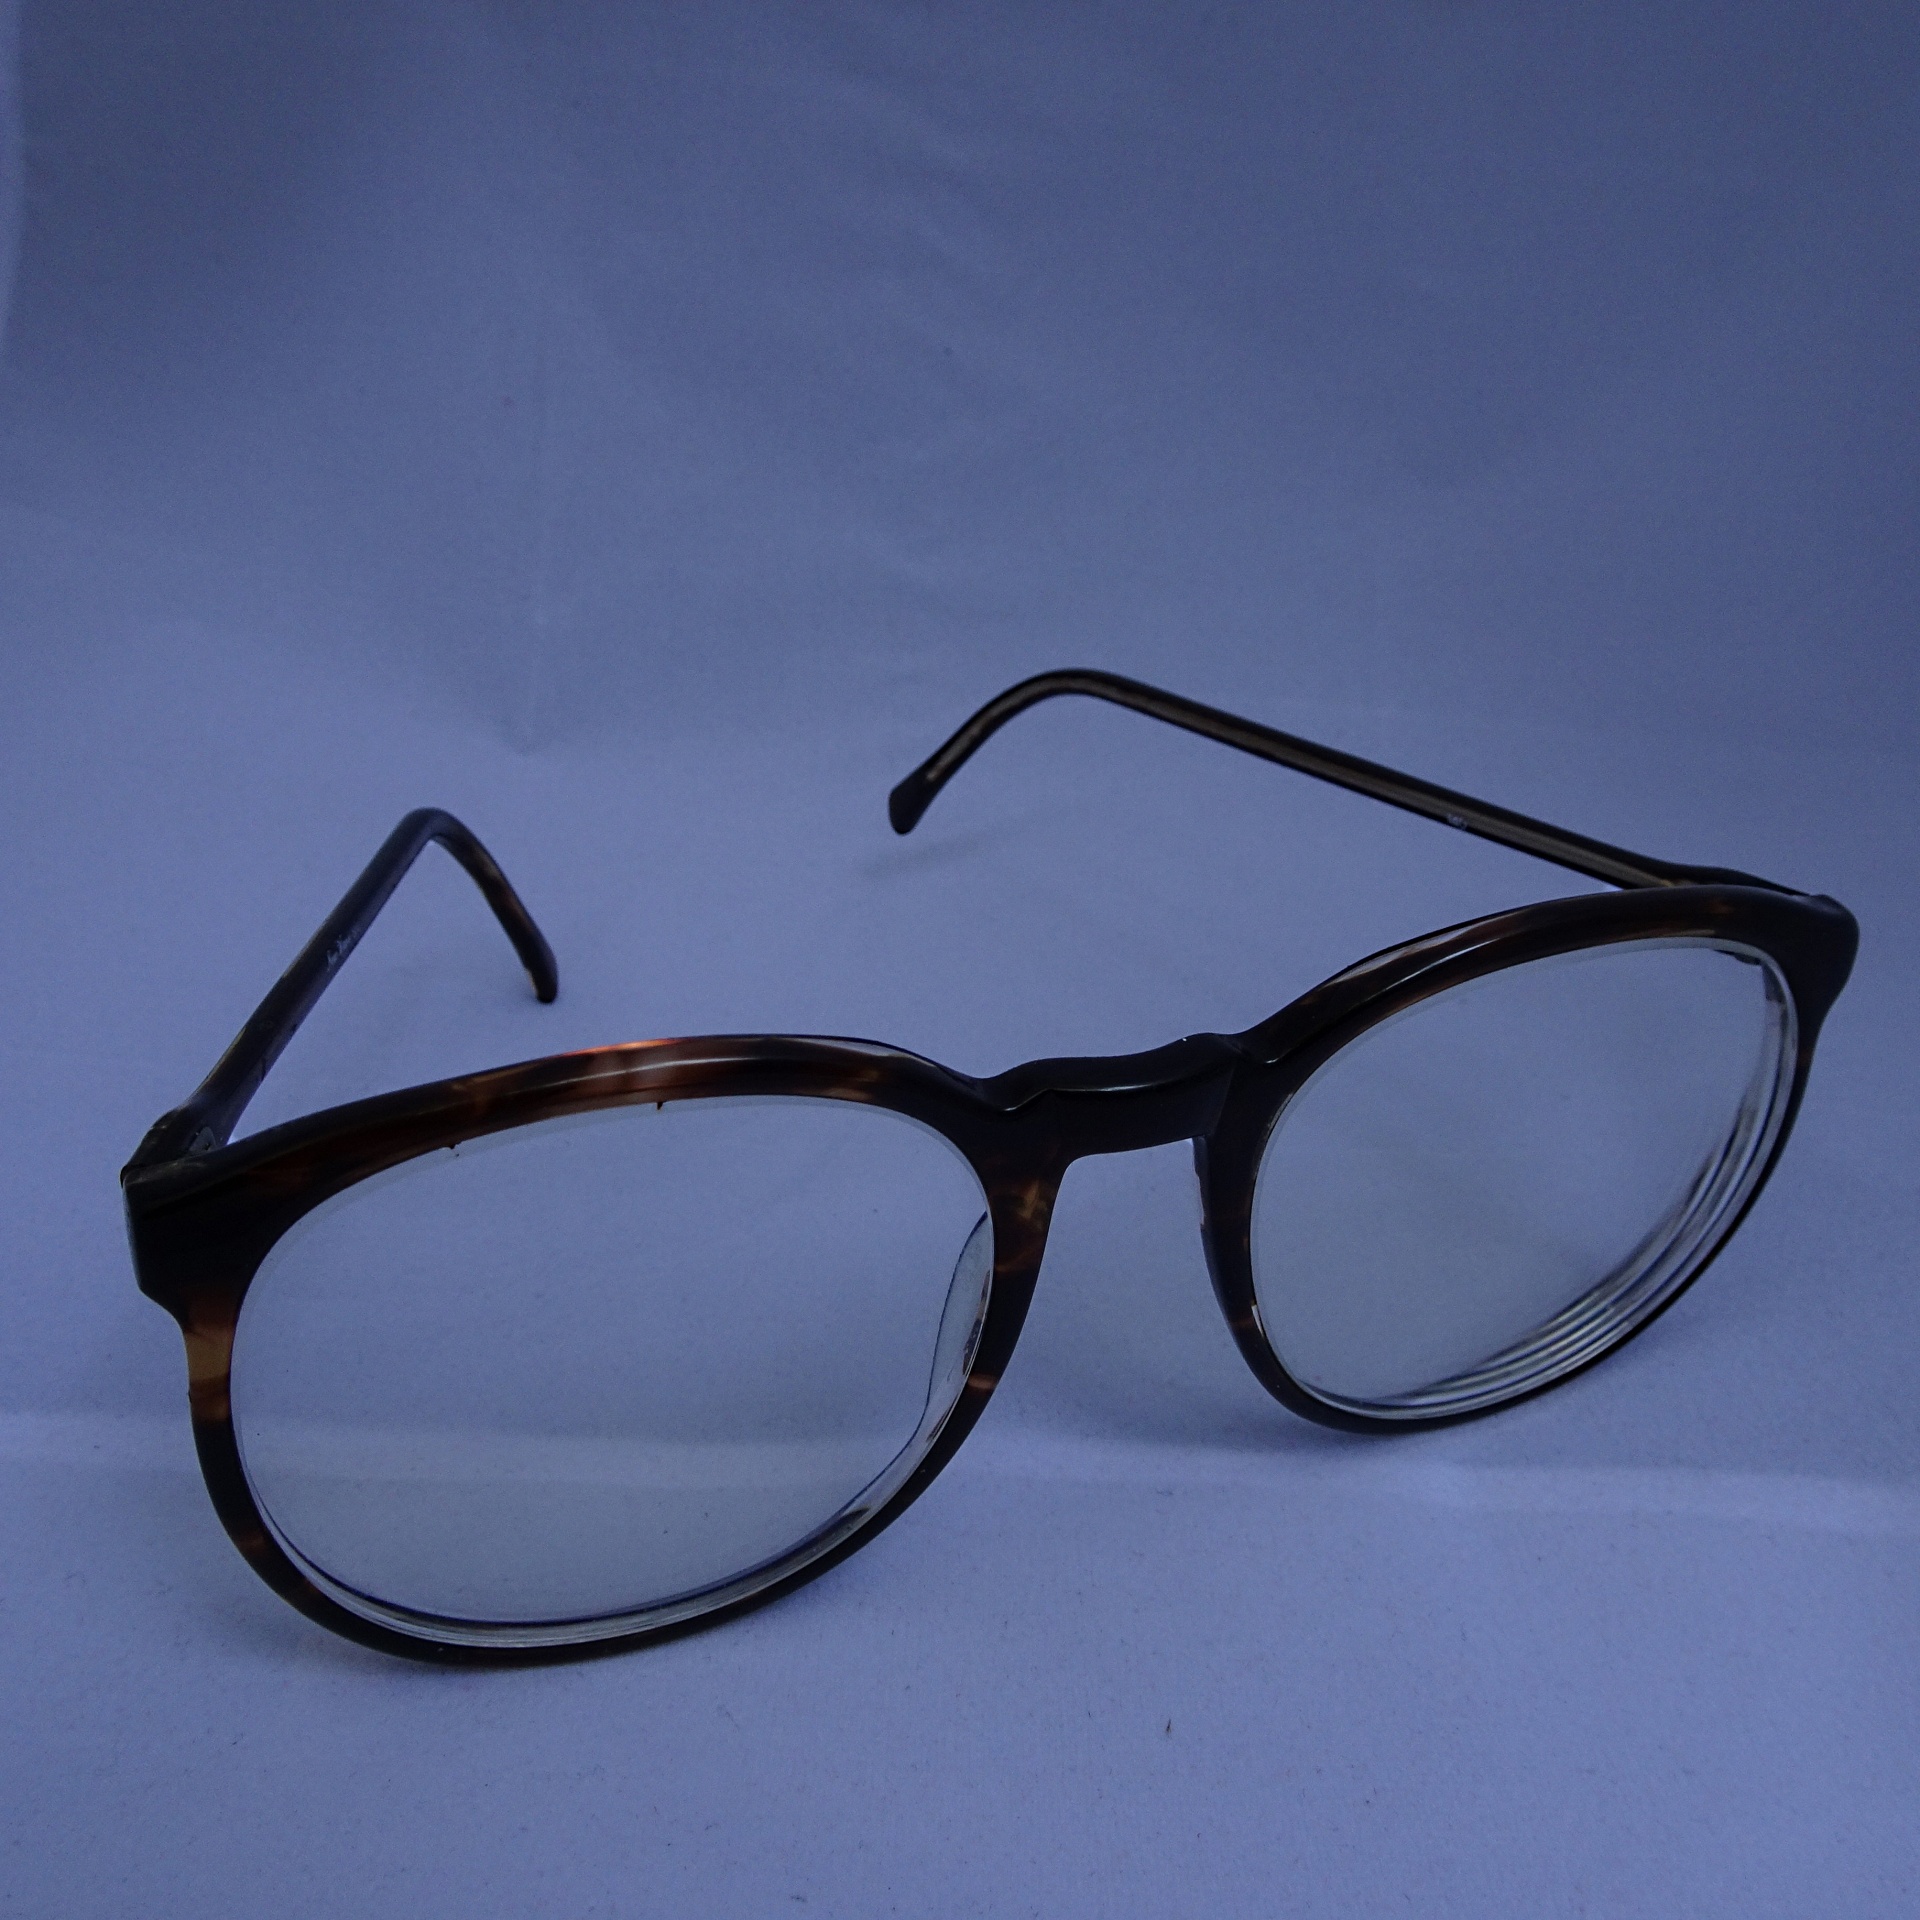 vintage glasses closeup free photo